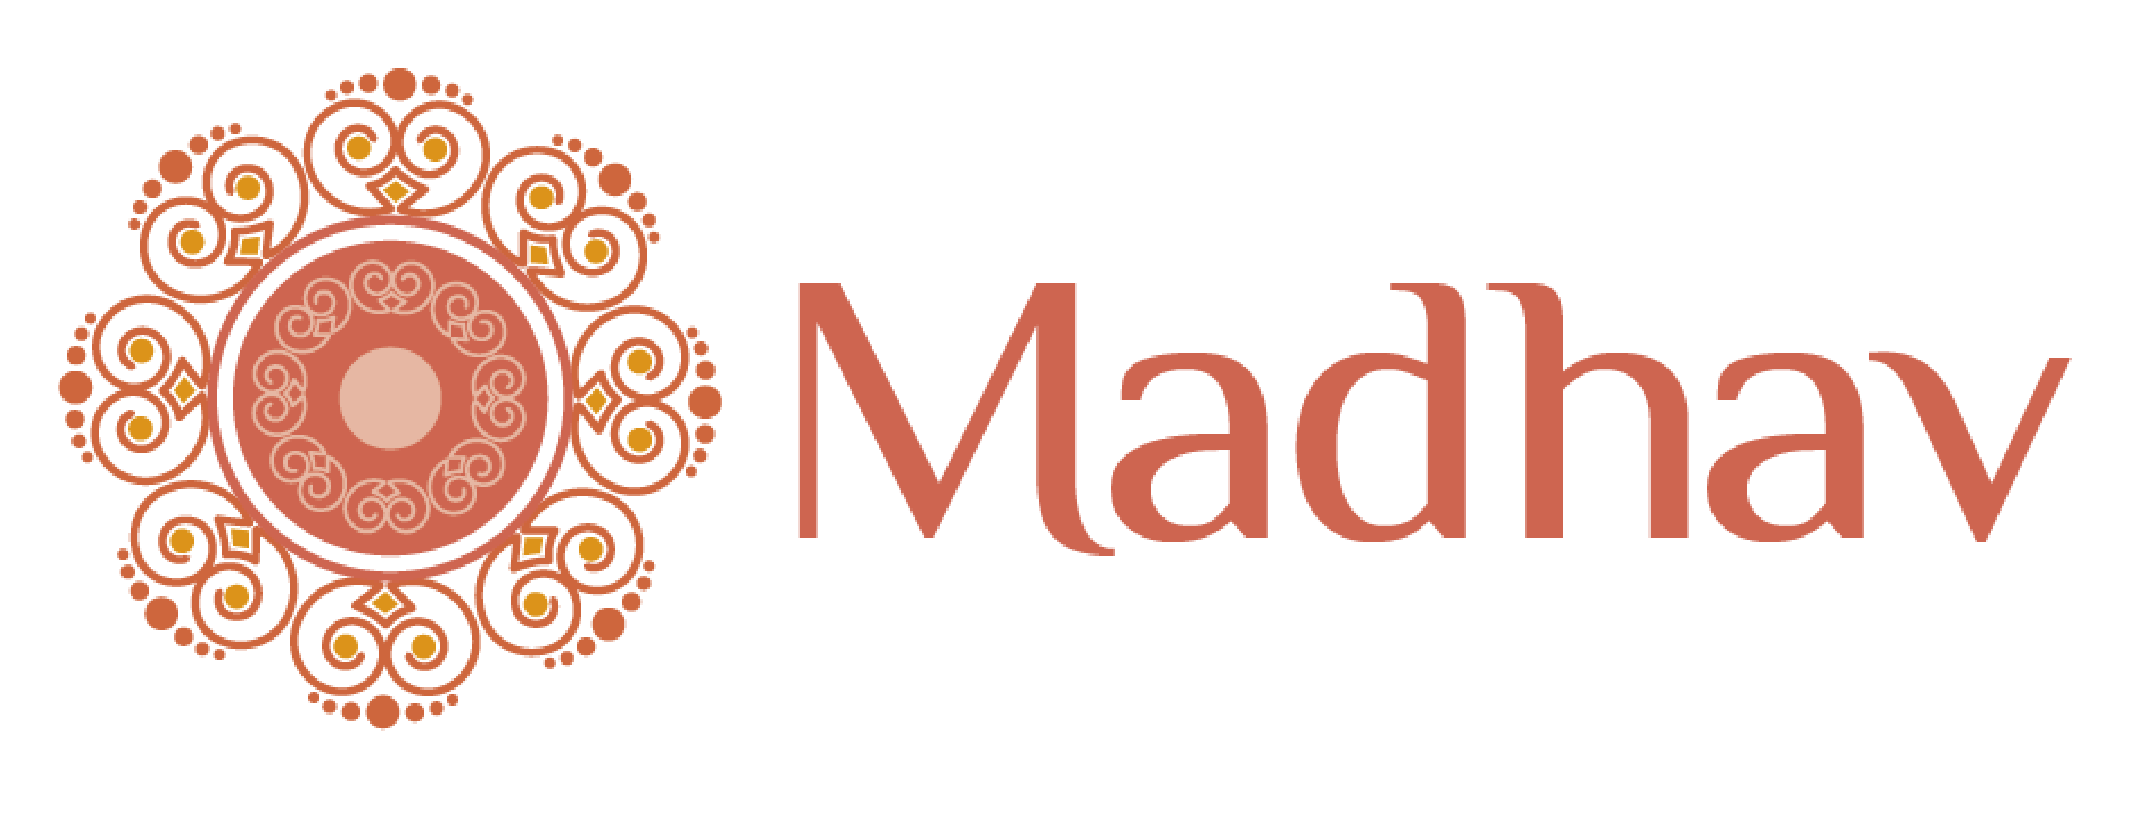 Madhav Enterprise